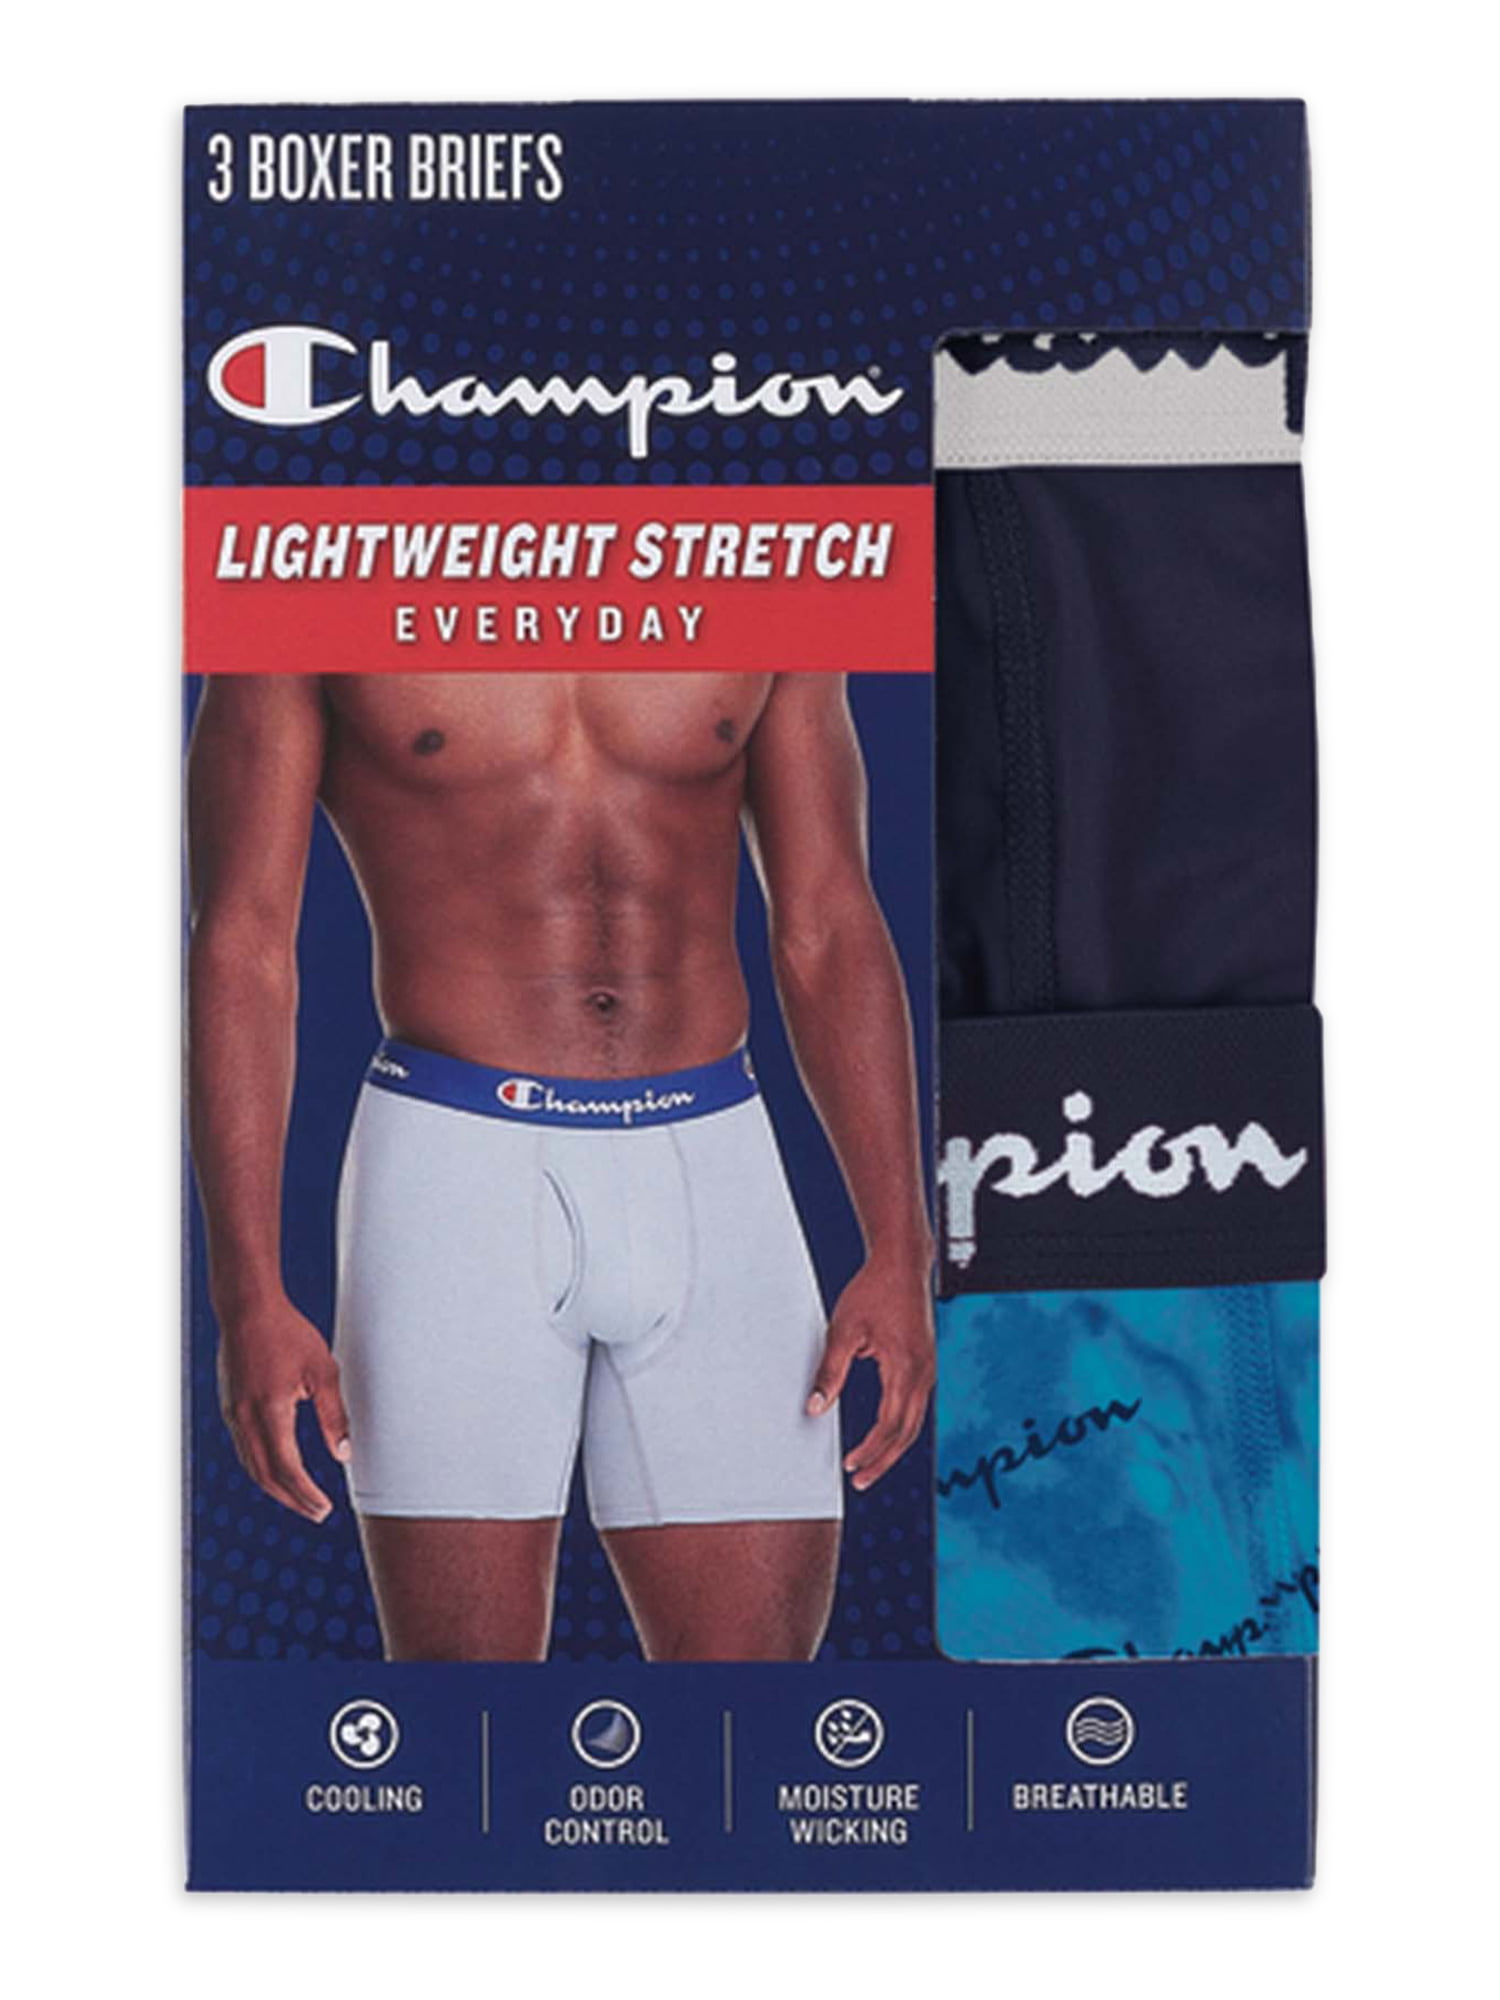 Reebok Men's Pro Series Performance Long Leg Boxer Brief, 7.5-Inch, 3-Pack  